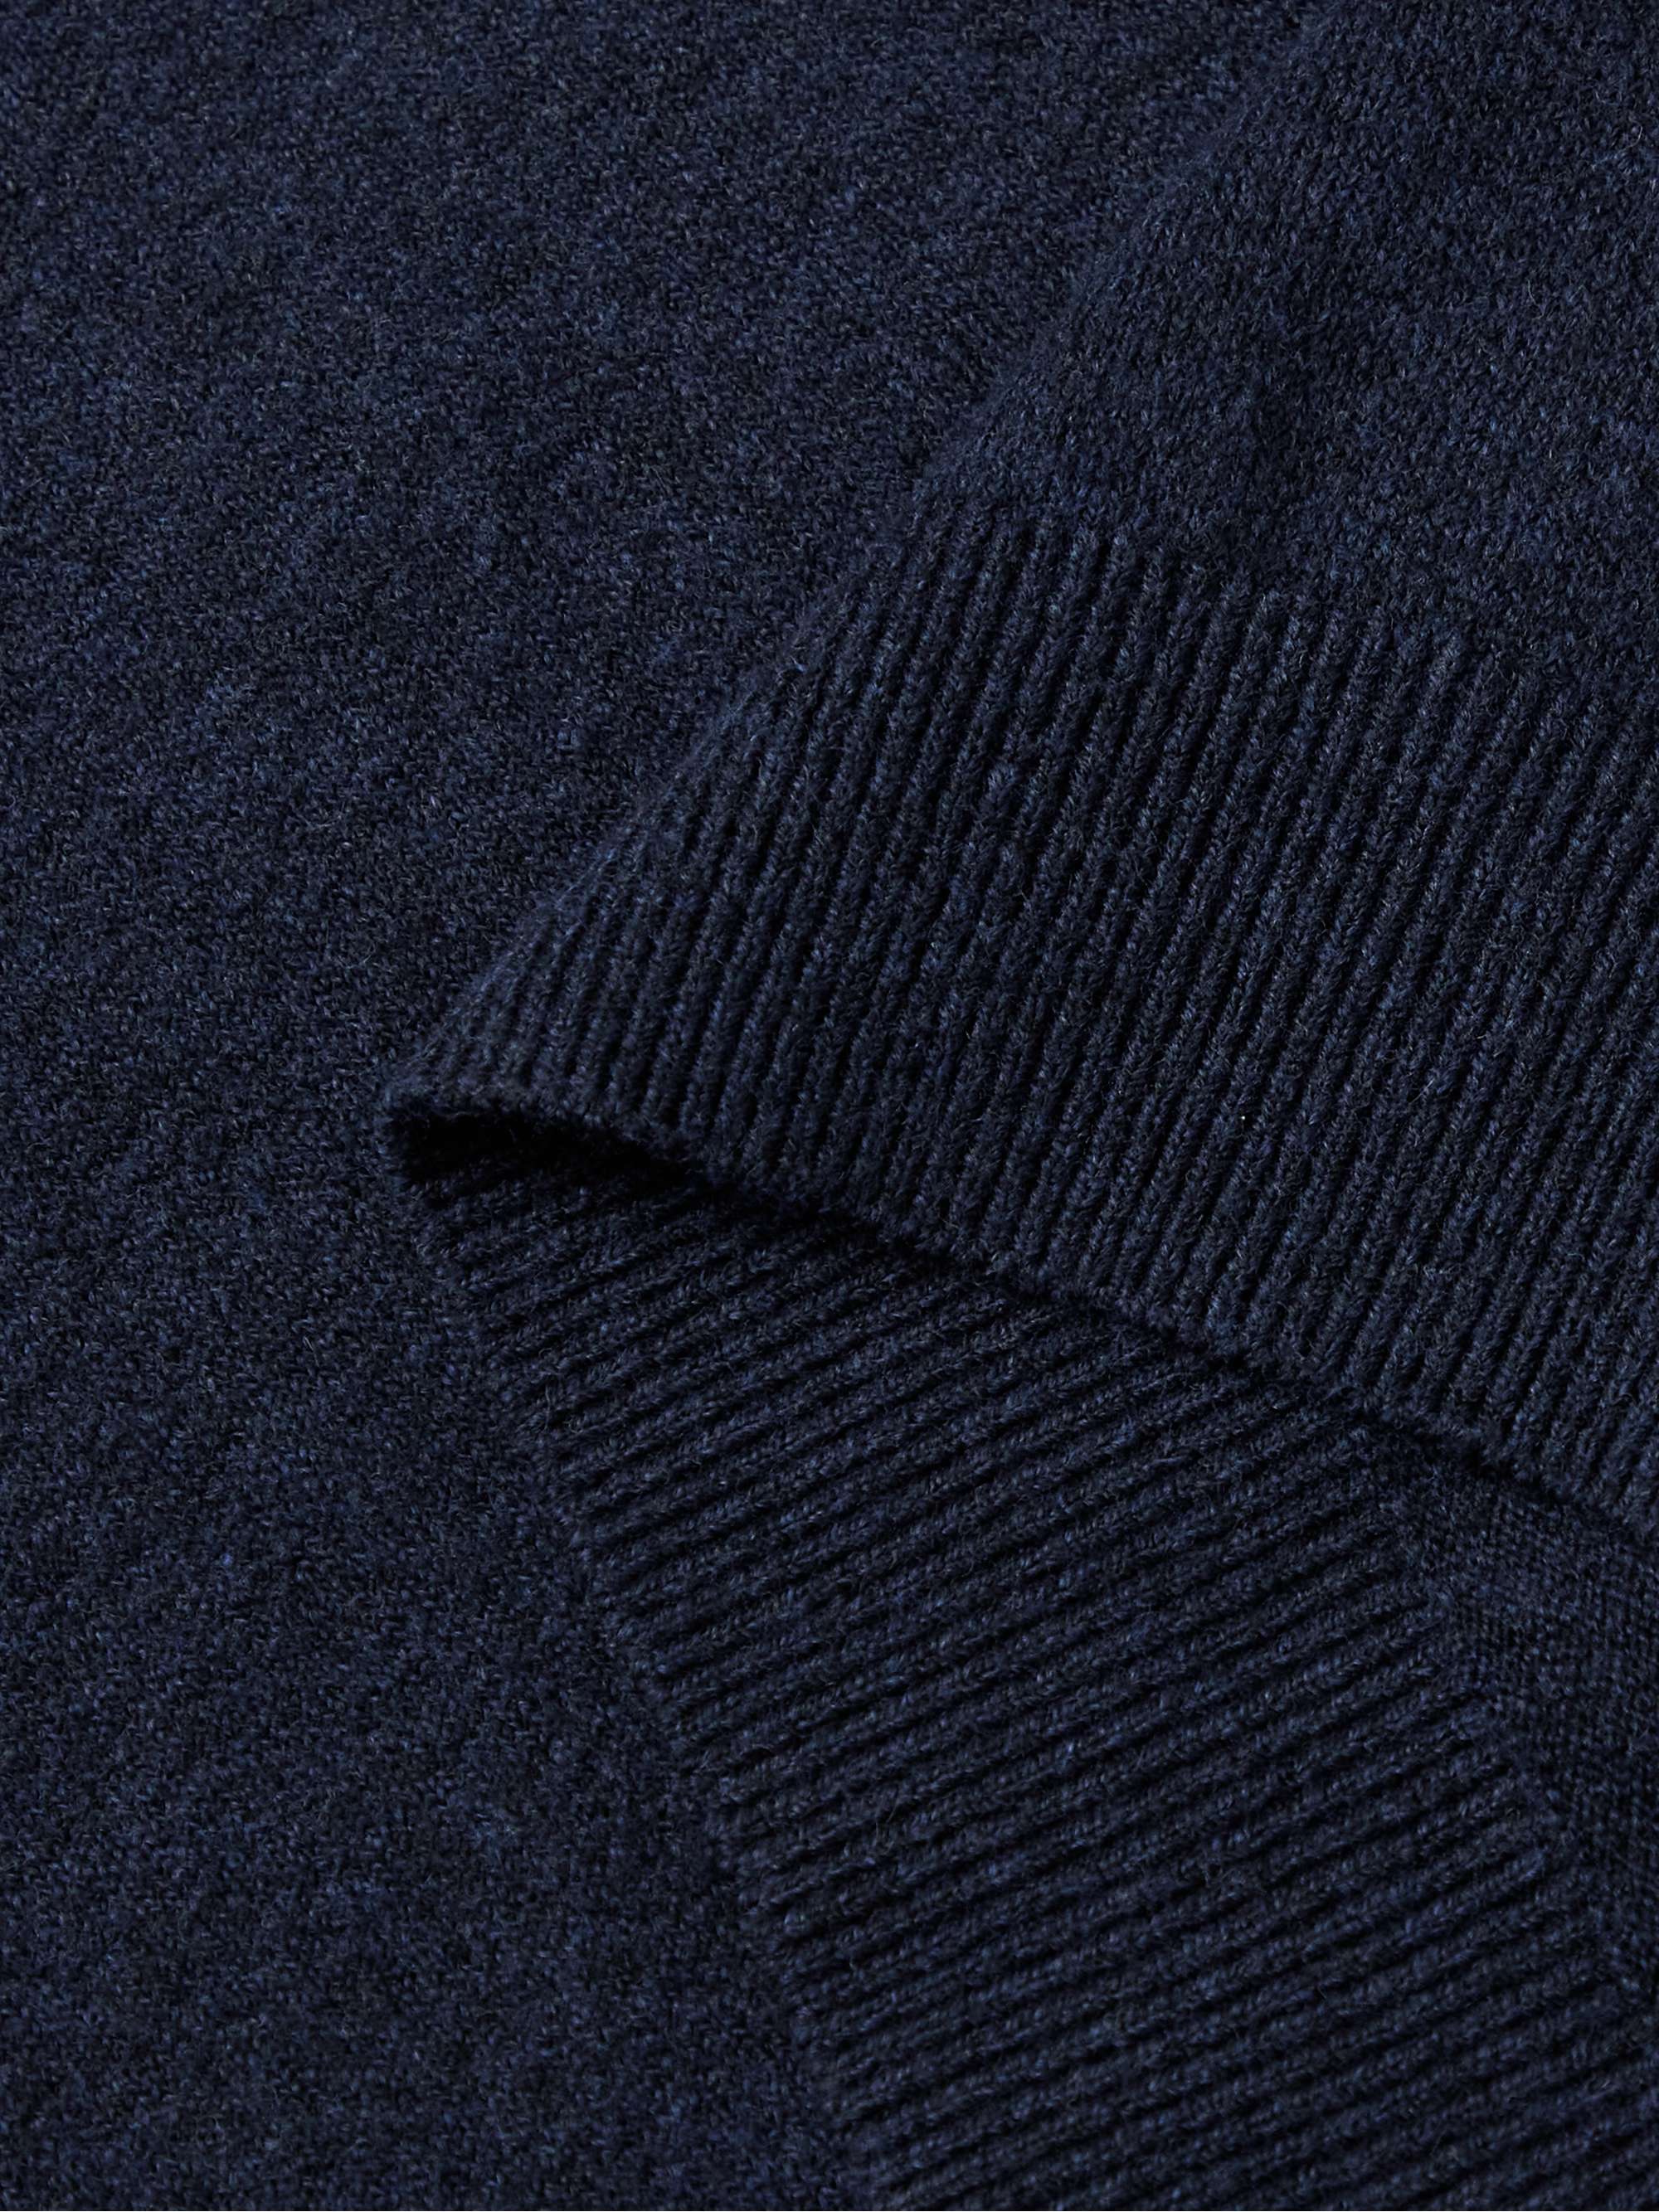 FAHERTY Jackson Hole Cotton-Blend Half-Zip Sweater